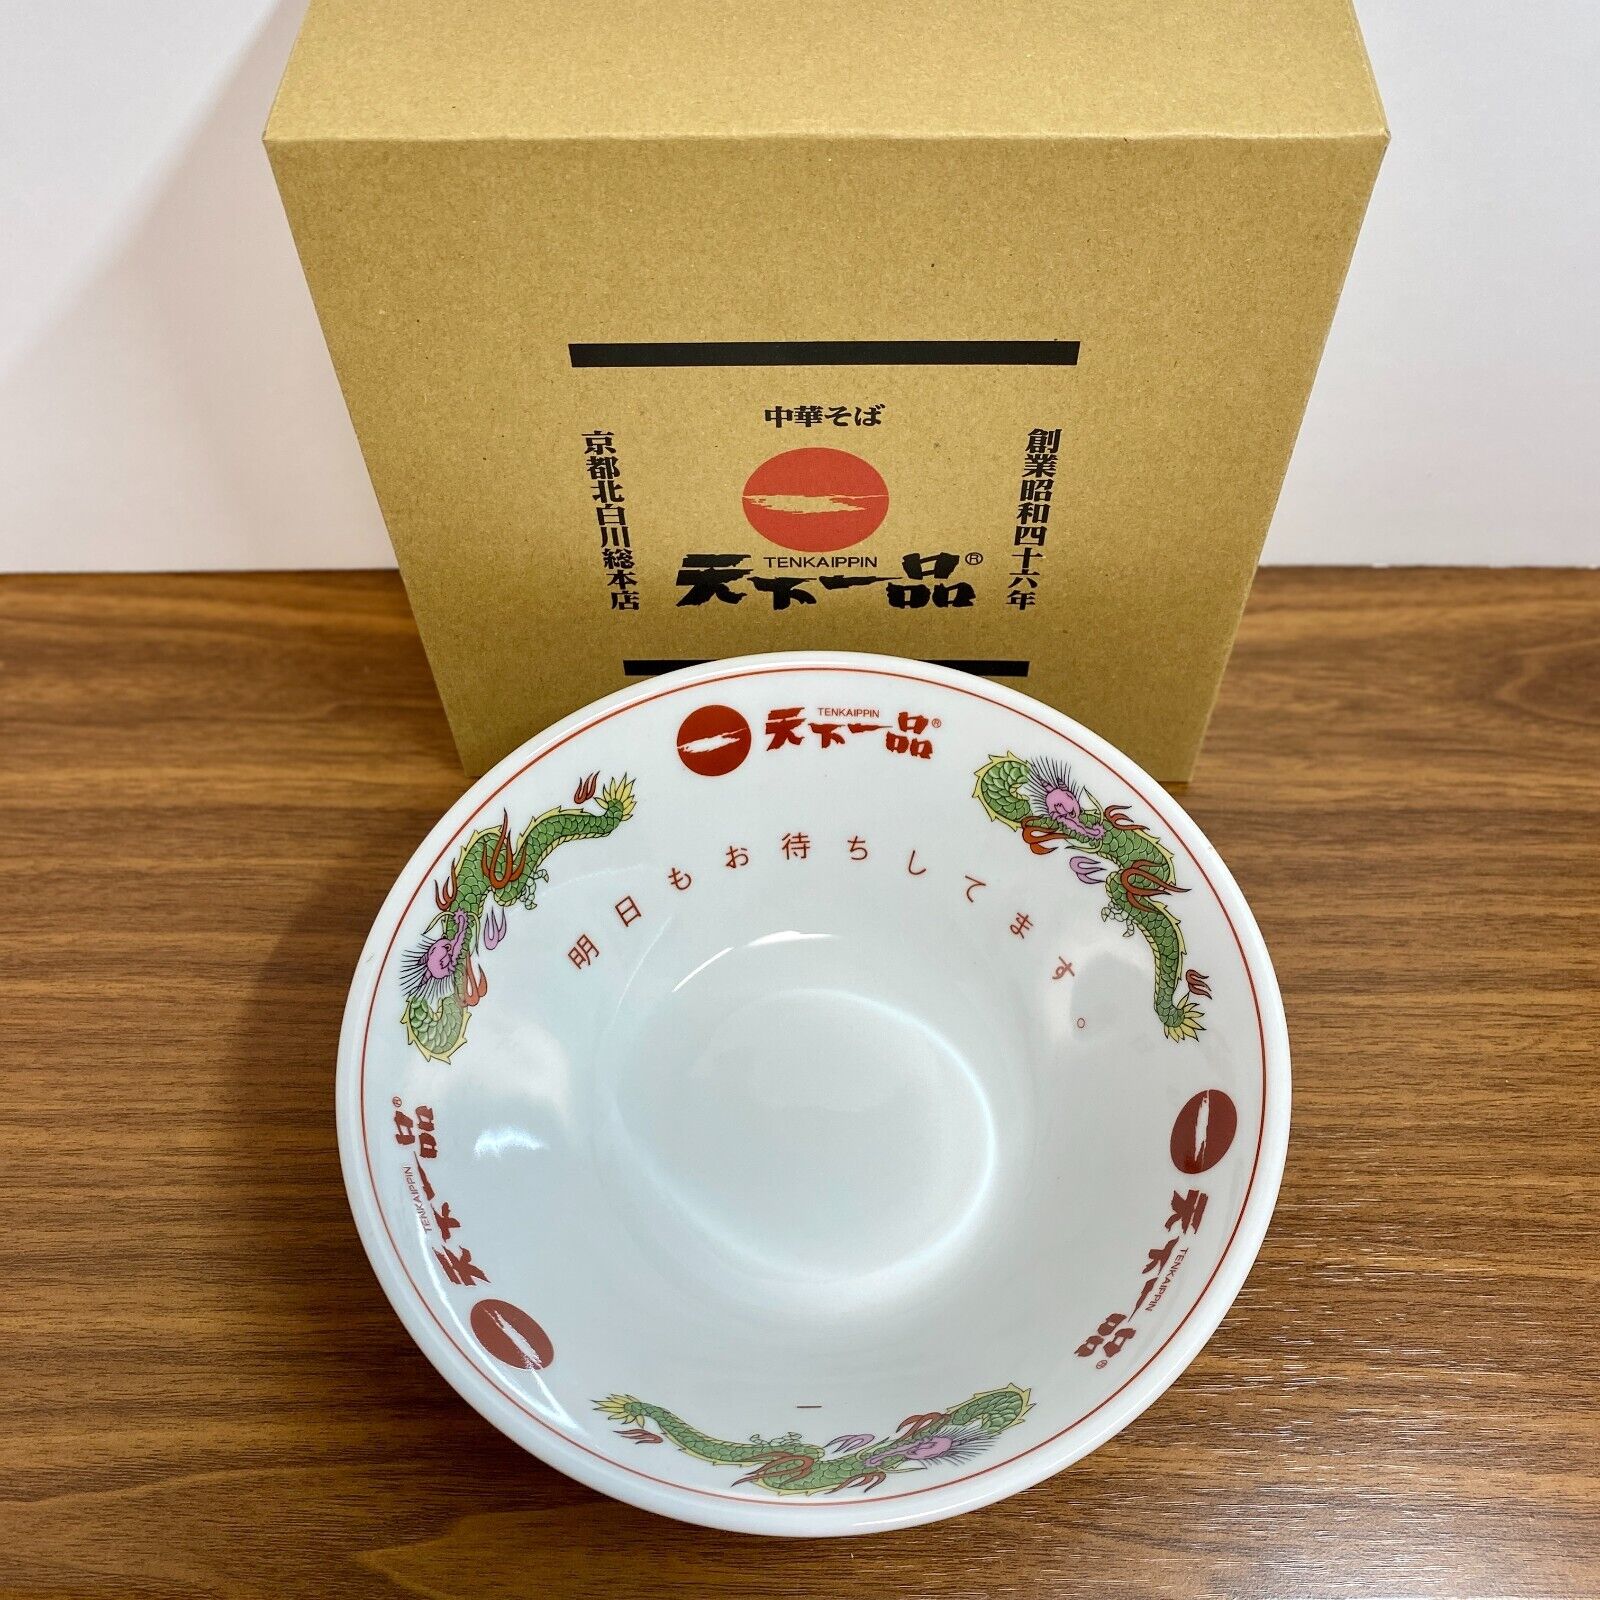 Tenkaippin Pottery Ramen Noodle Soup Bowl Donburi Regular Size From Japan 天下一品